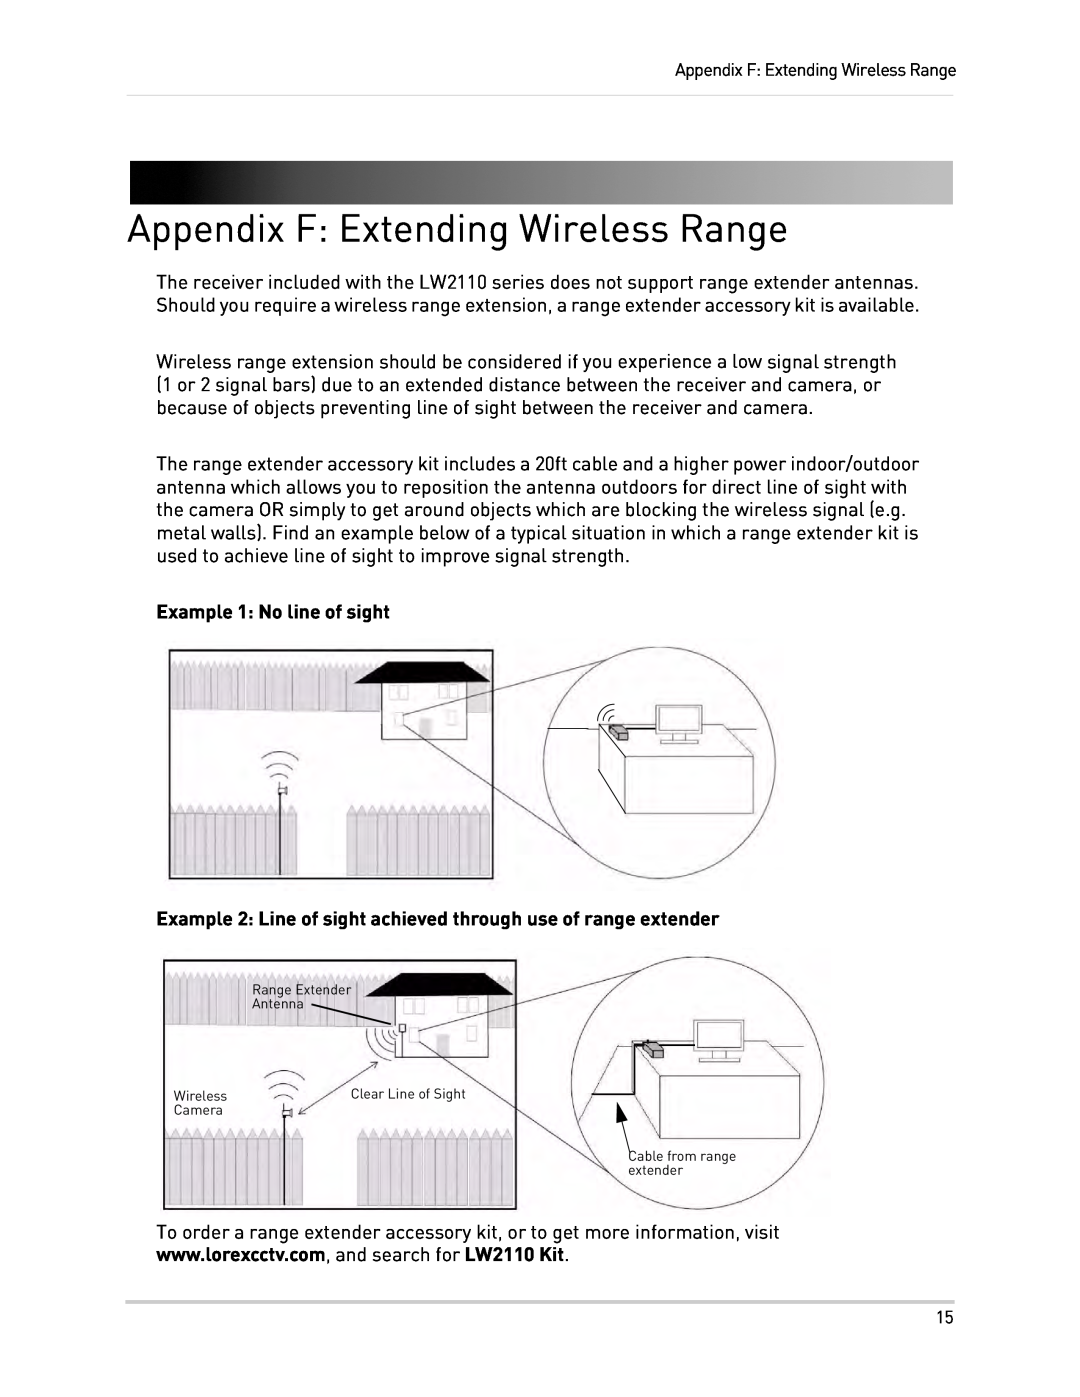 LOREX Technology LW2110 instruction manual Appendix F Extending Wireless Range, Example 1 No line of sight 